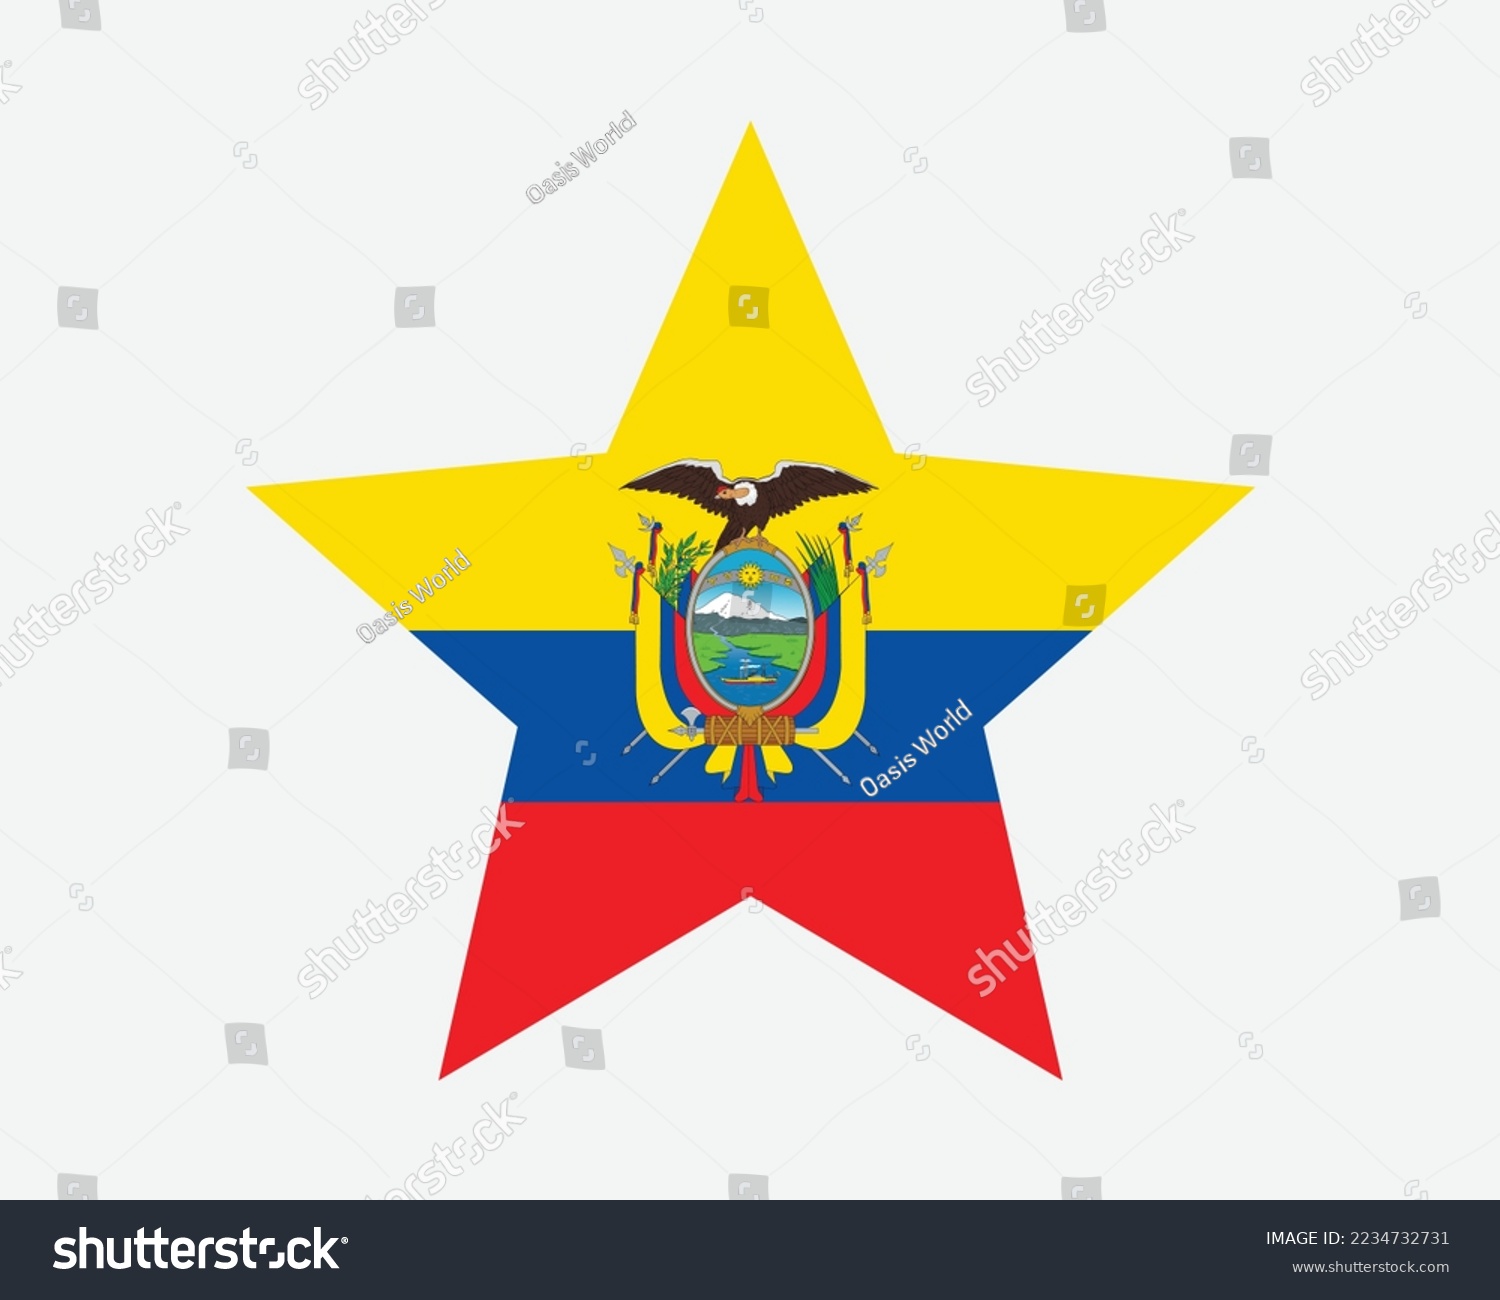 SVG of Ecuador Star Flag. Ecuadorian Star Shape Flag. Republic of Ecuador Country National Banner Icon Symbol Vector Flat Artwork Graphic Illustration svg